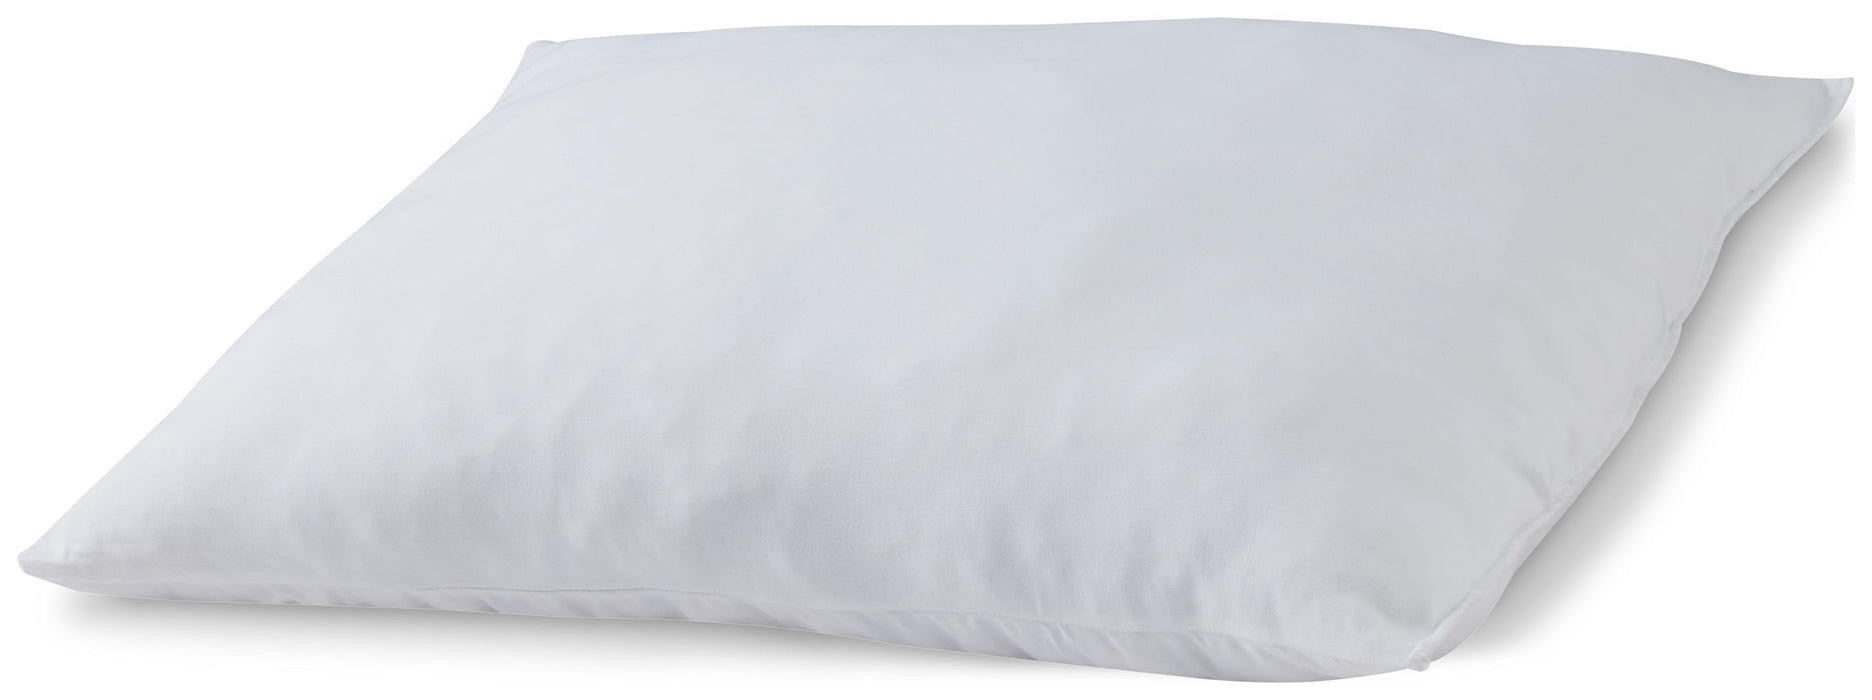 Z123 Pillow Series - Microfiber Pillow